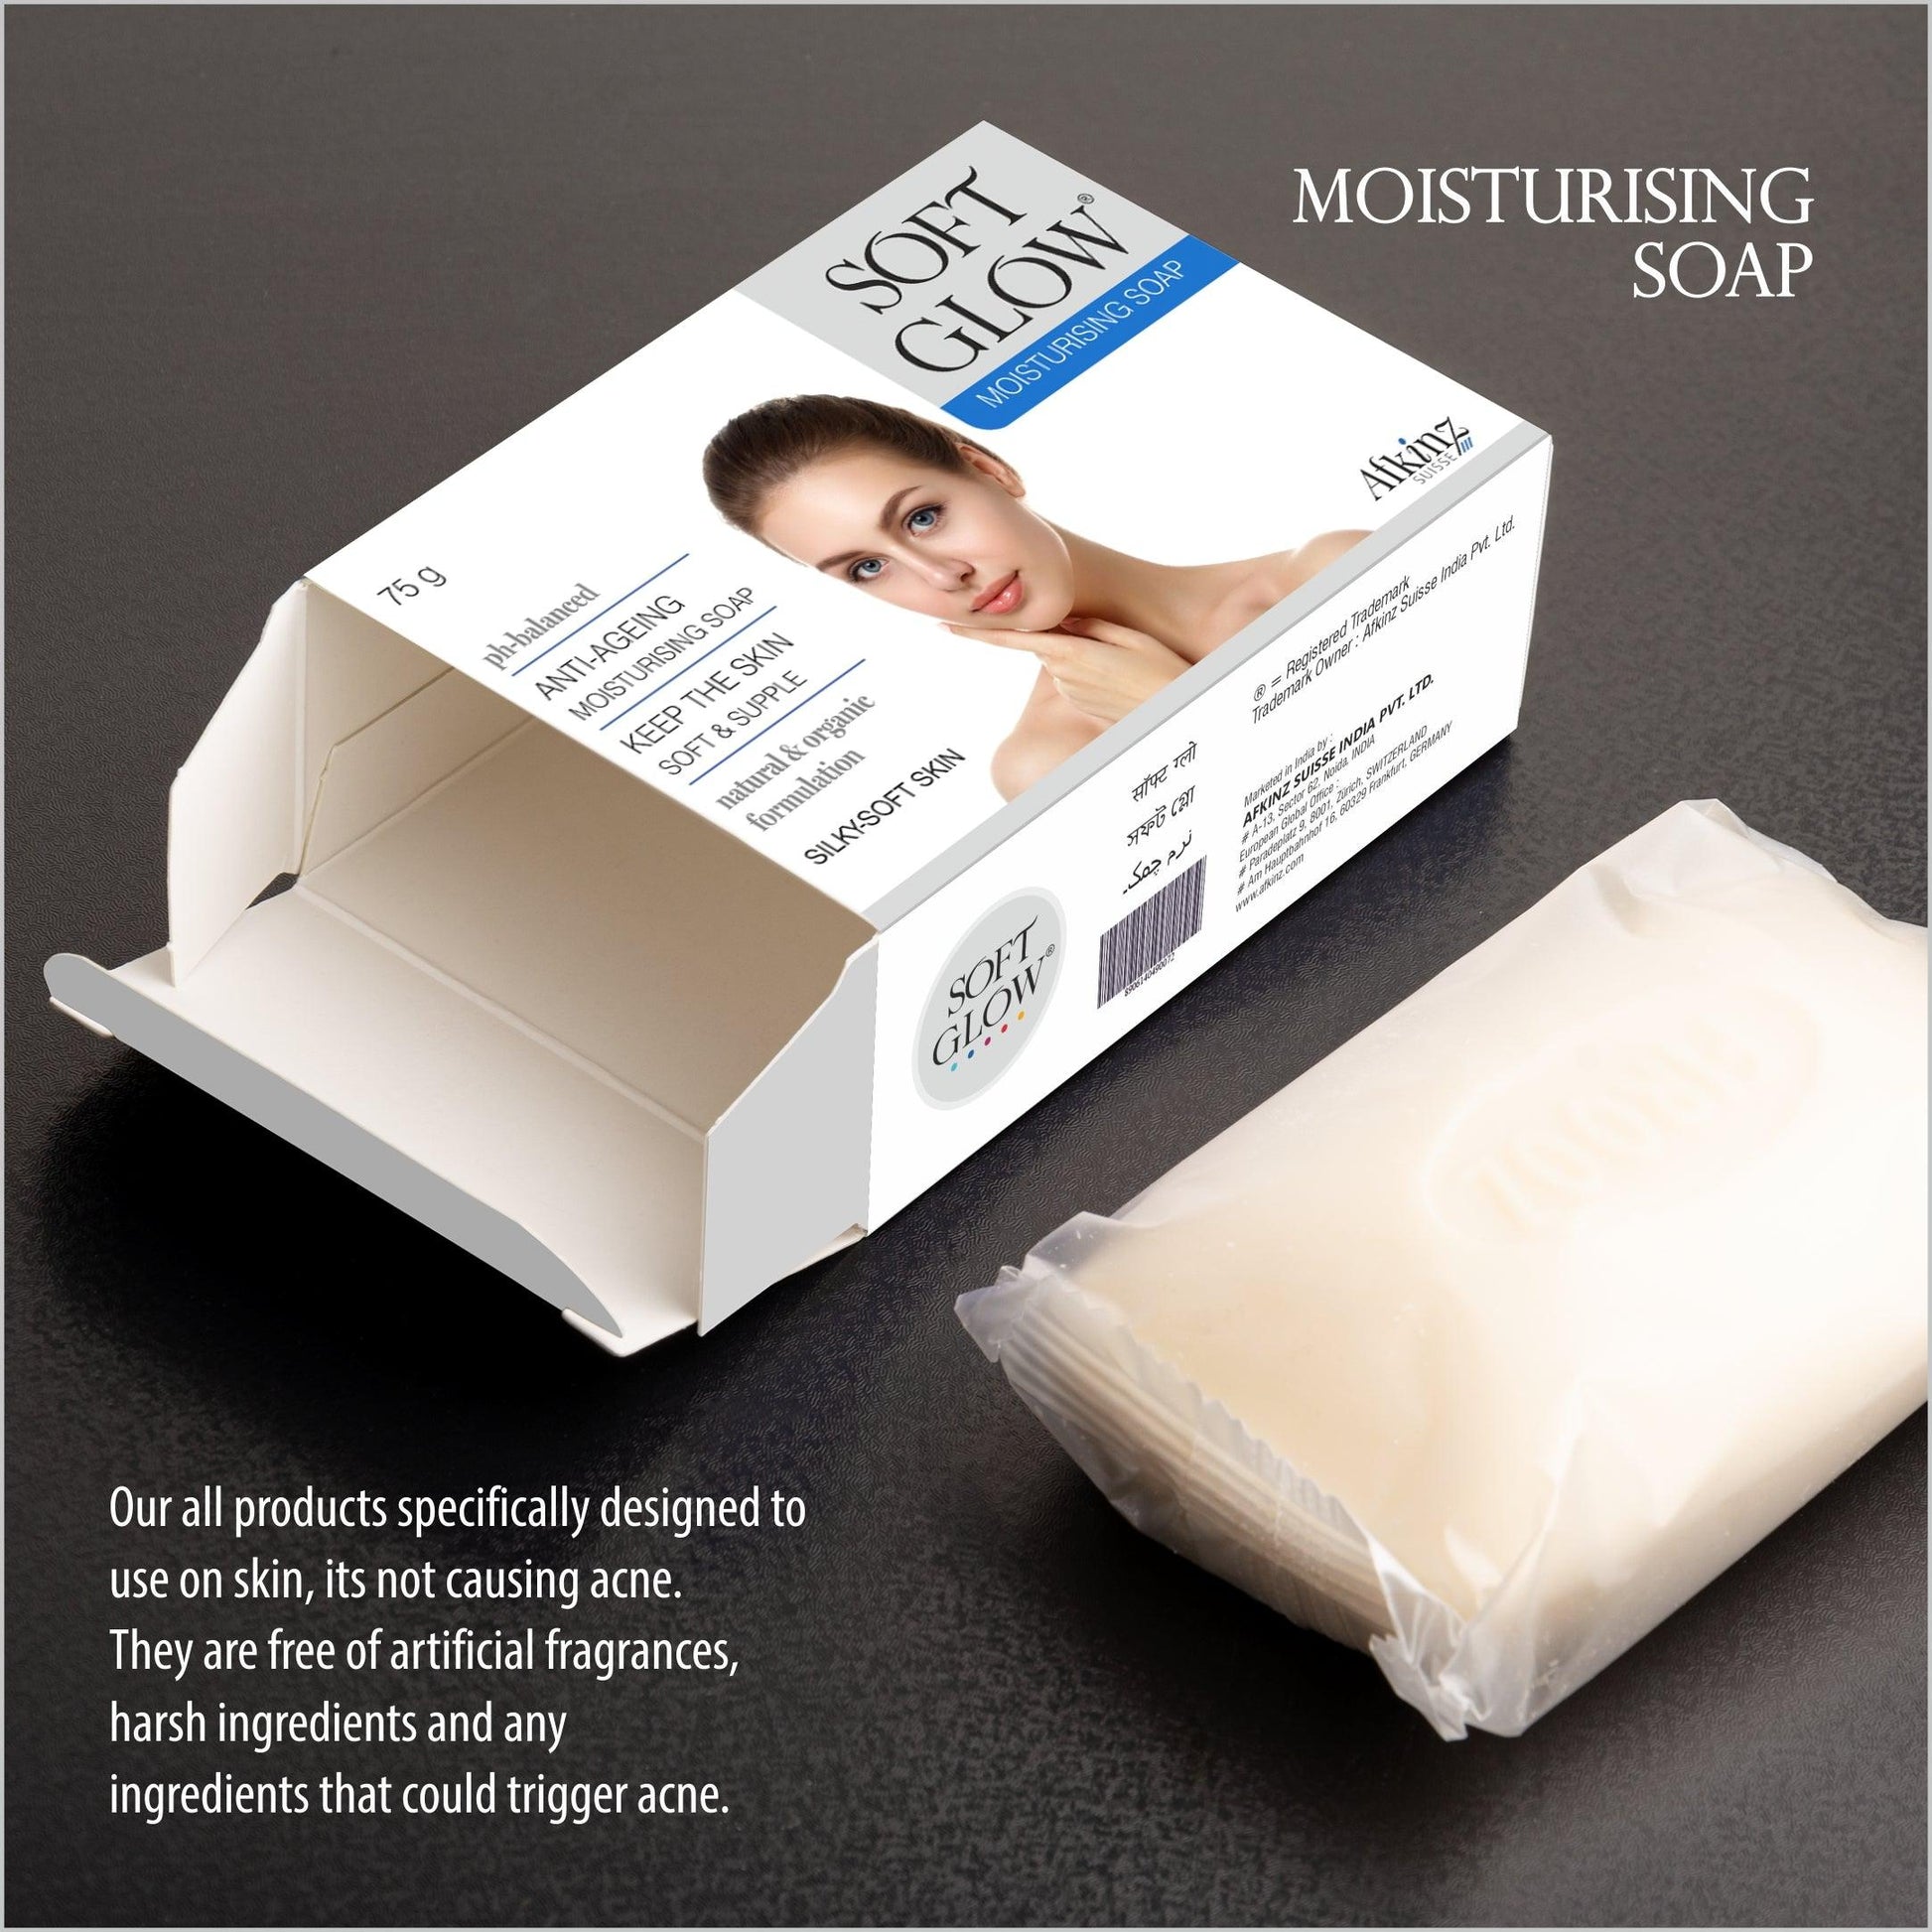 Soft Glow Moisturising Soap for Fairness, Acne, Black Heads, Pimples & Anti-Aging - Olefia Biopharma Limited